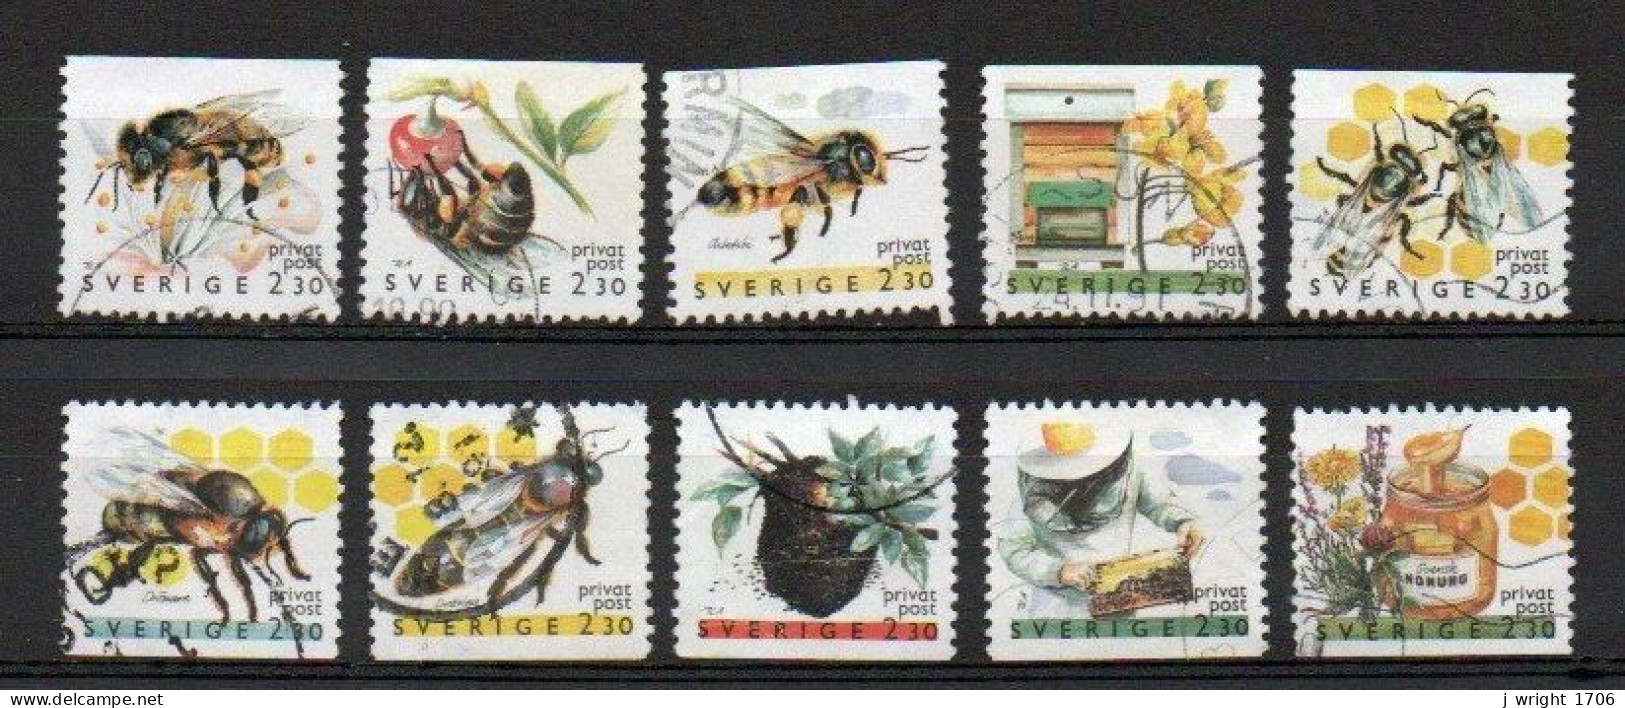 Sweden, 1990, Rebate Stamps/Honey Bees, Set, USED - Usati